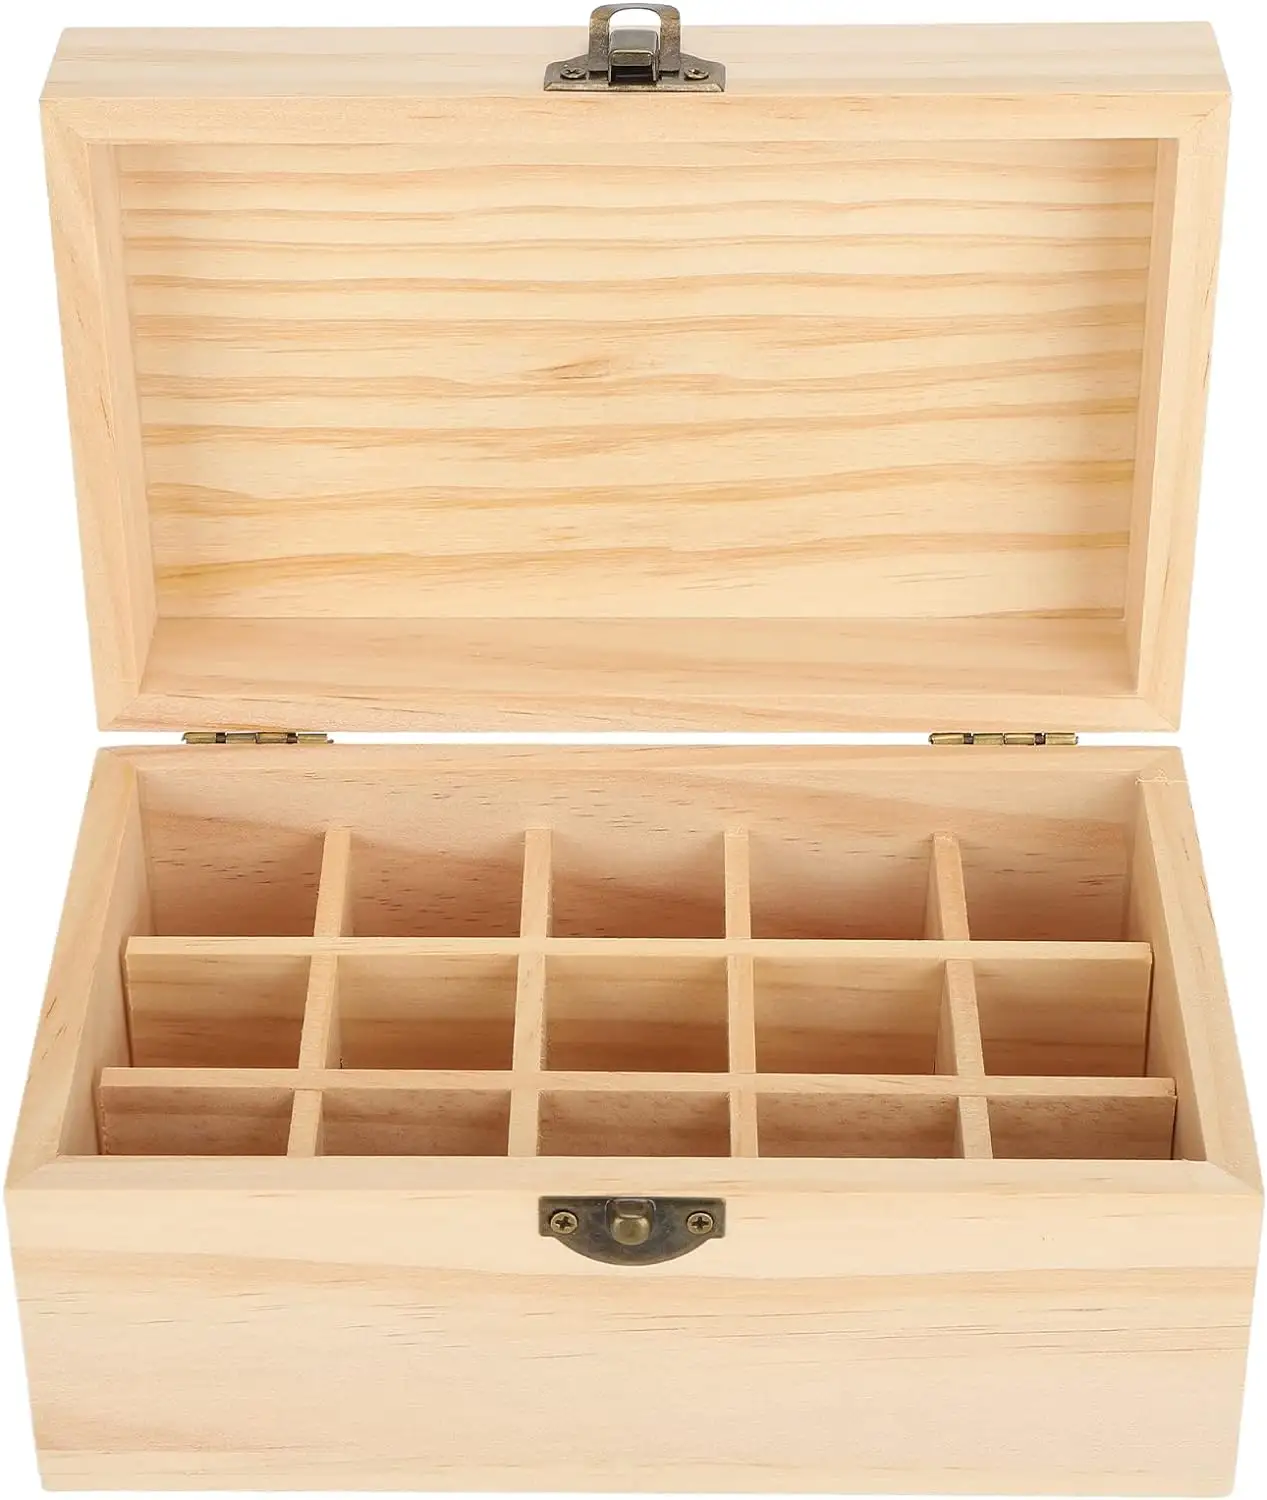 EssentialOil Wooden Box15 Slots Essential Oil Storage Box Pine Essential Oil Storage Box HouseholdStorageBox, 18.2 x 11.5 x 9 cm